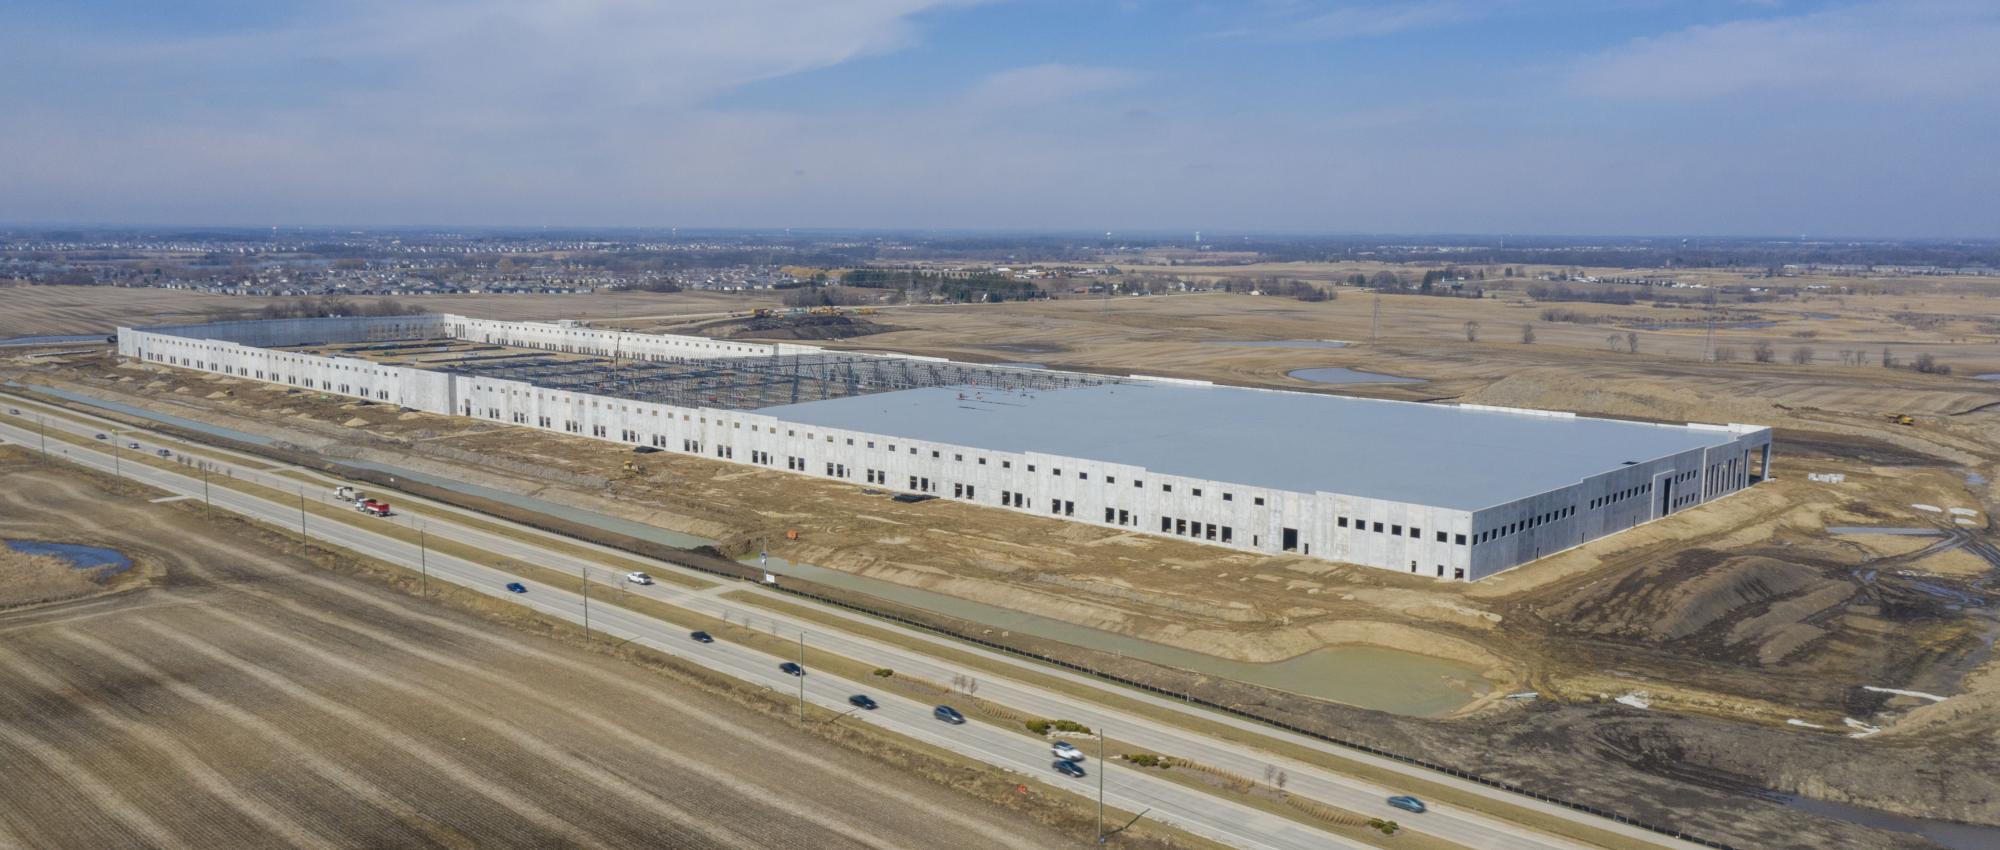 1.4M SF warehouse facility in Grayslake, Illinois